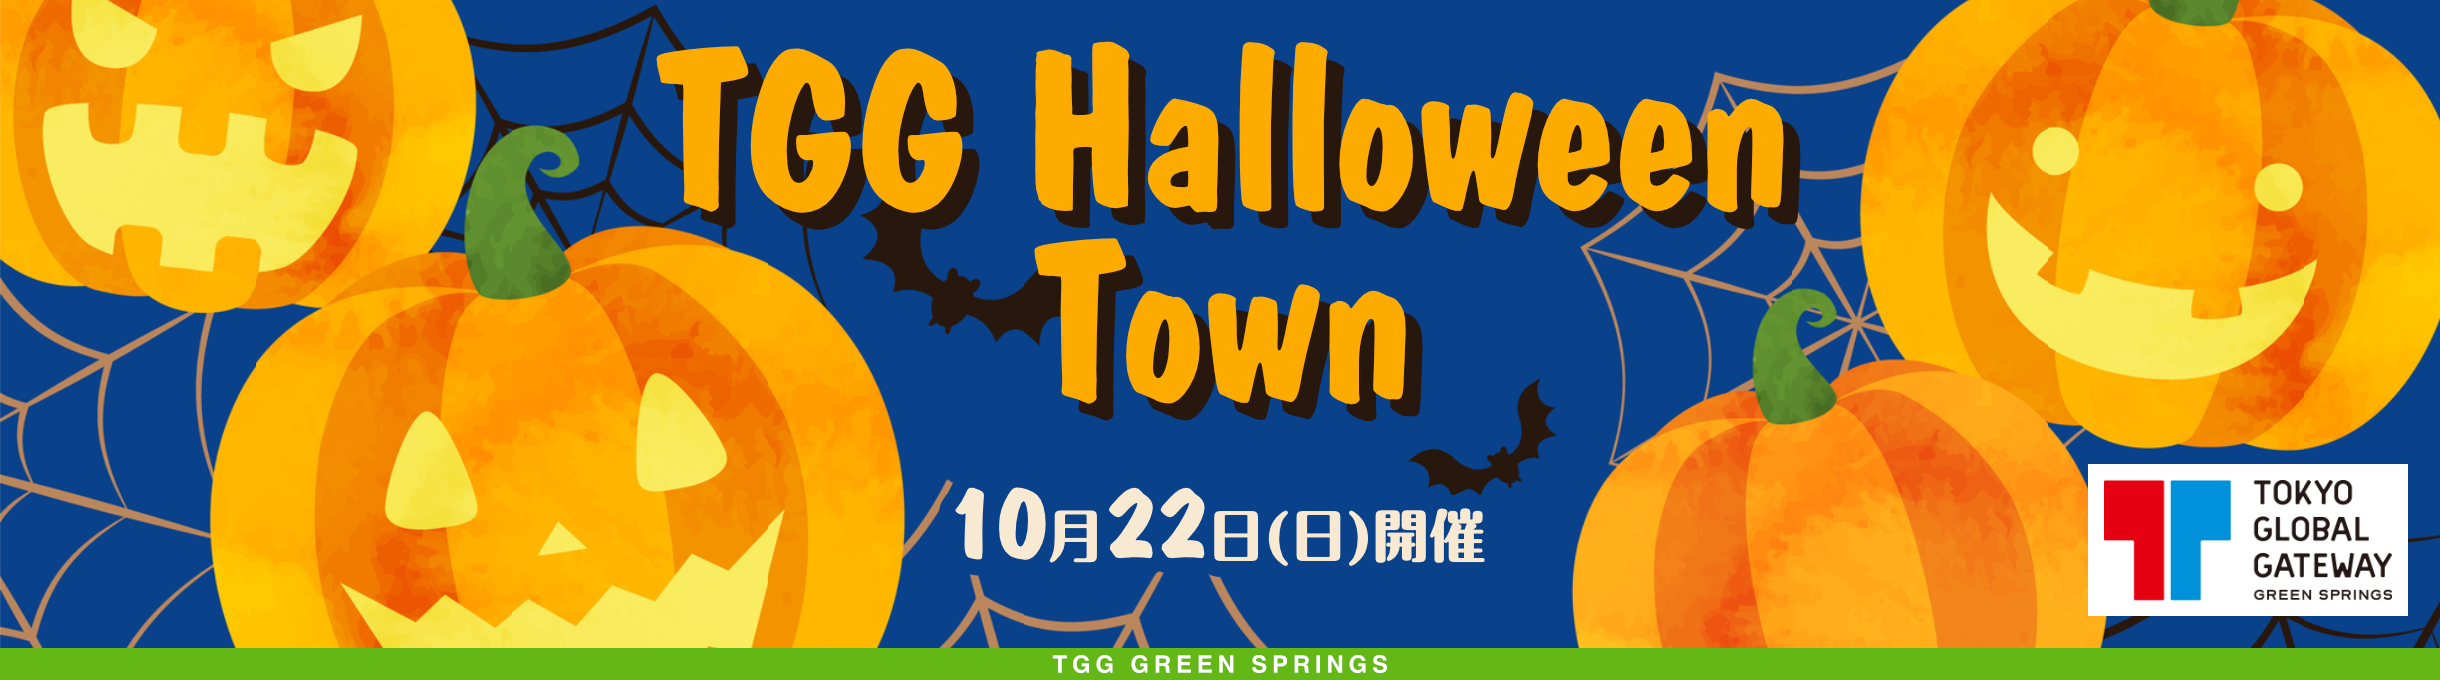 TGG Halloween Town 10月22日(日)開催 TGG GREEN SPRINGS